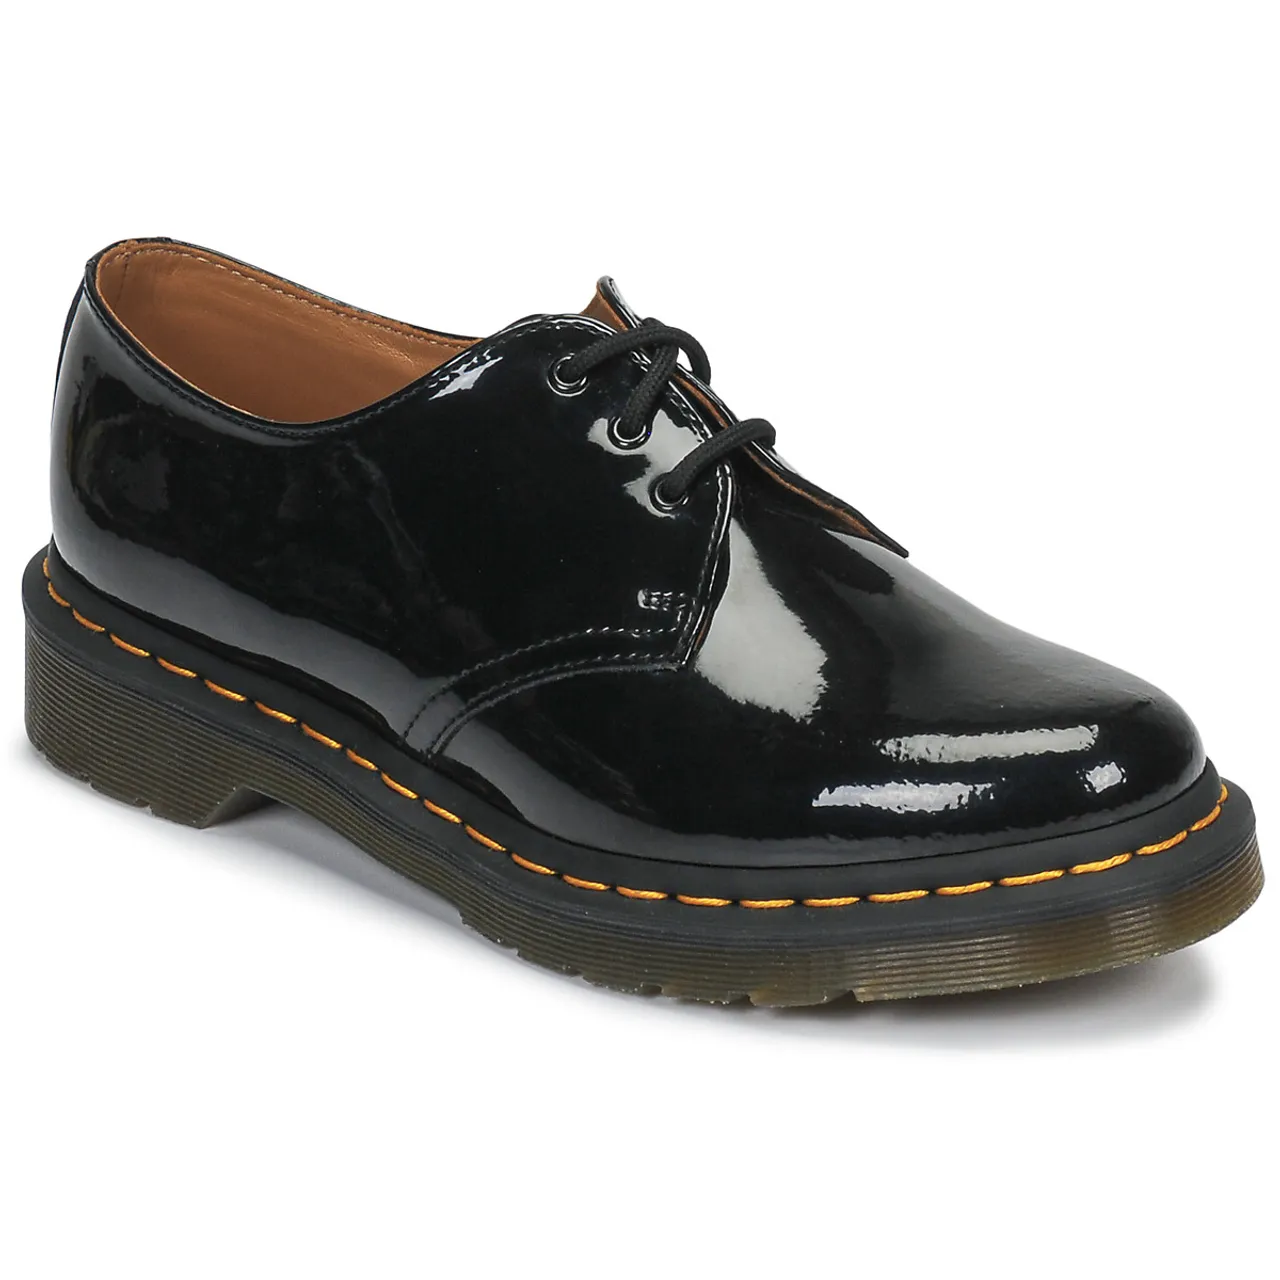 Dr. Martens  1461 3 EYE SHOE  women's Casual Shoes in Black